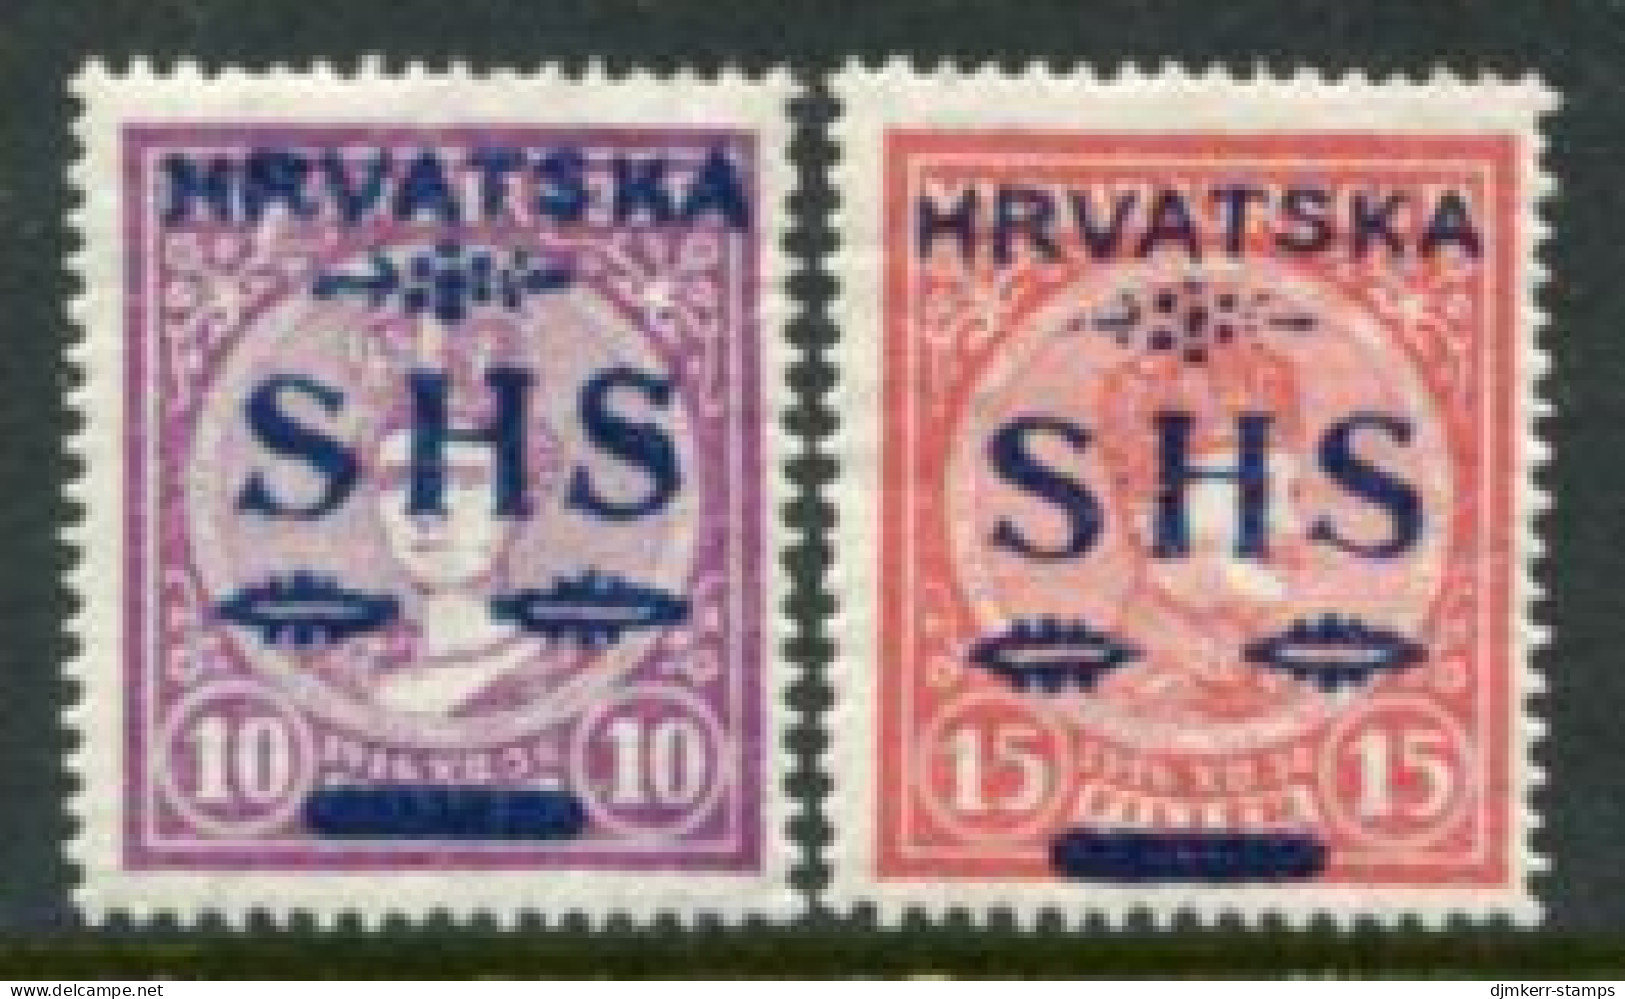 YUGOSLAVIA 1918 SHS Hrvatska Overprint On Hungary  Coronation Set Of 2 LHM / *.   Michel 64-65 - Ongebruikt